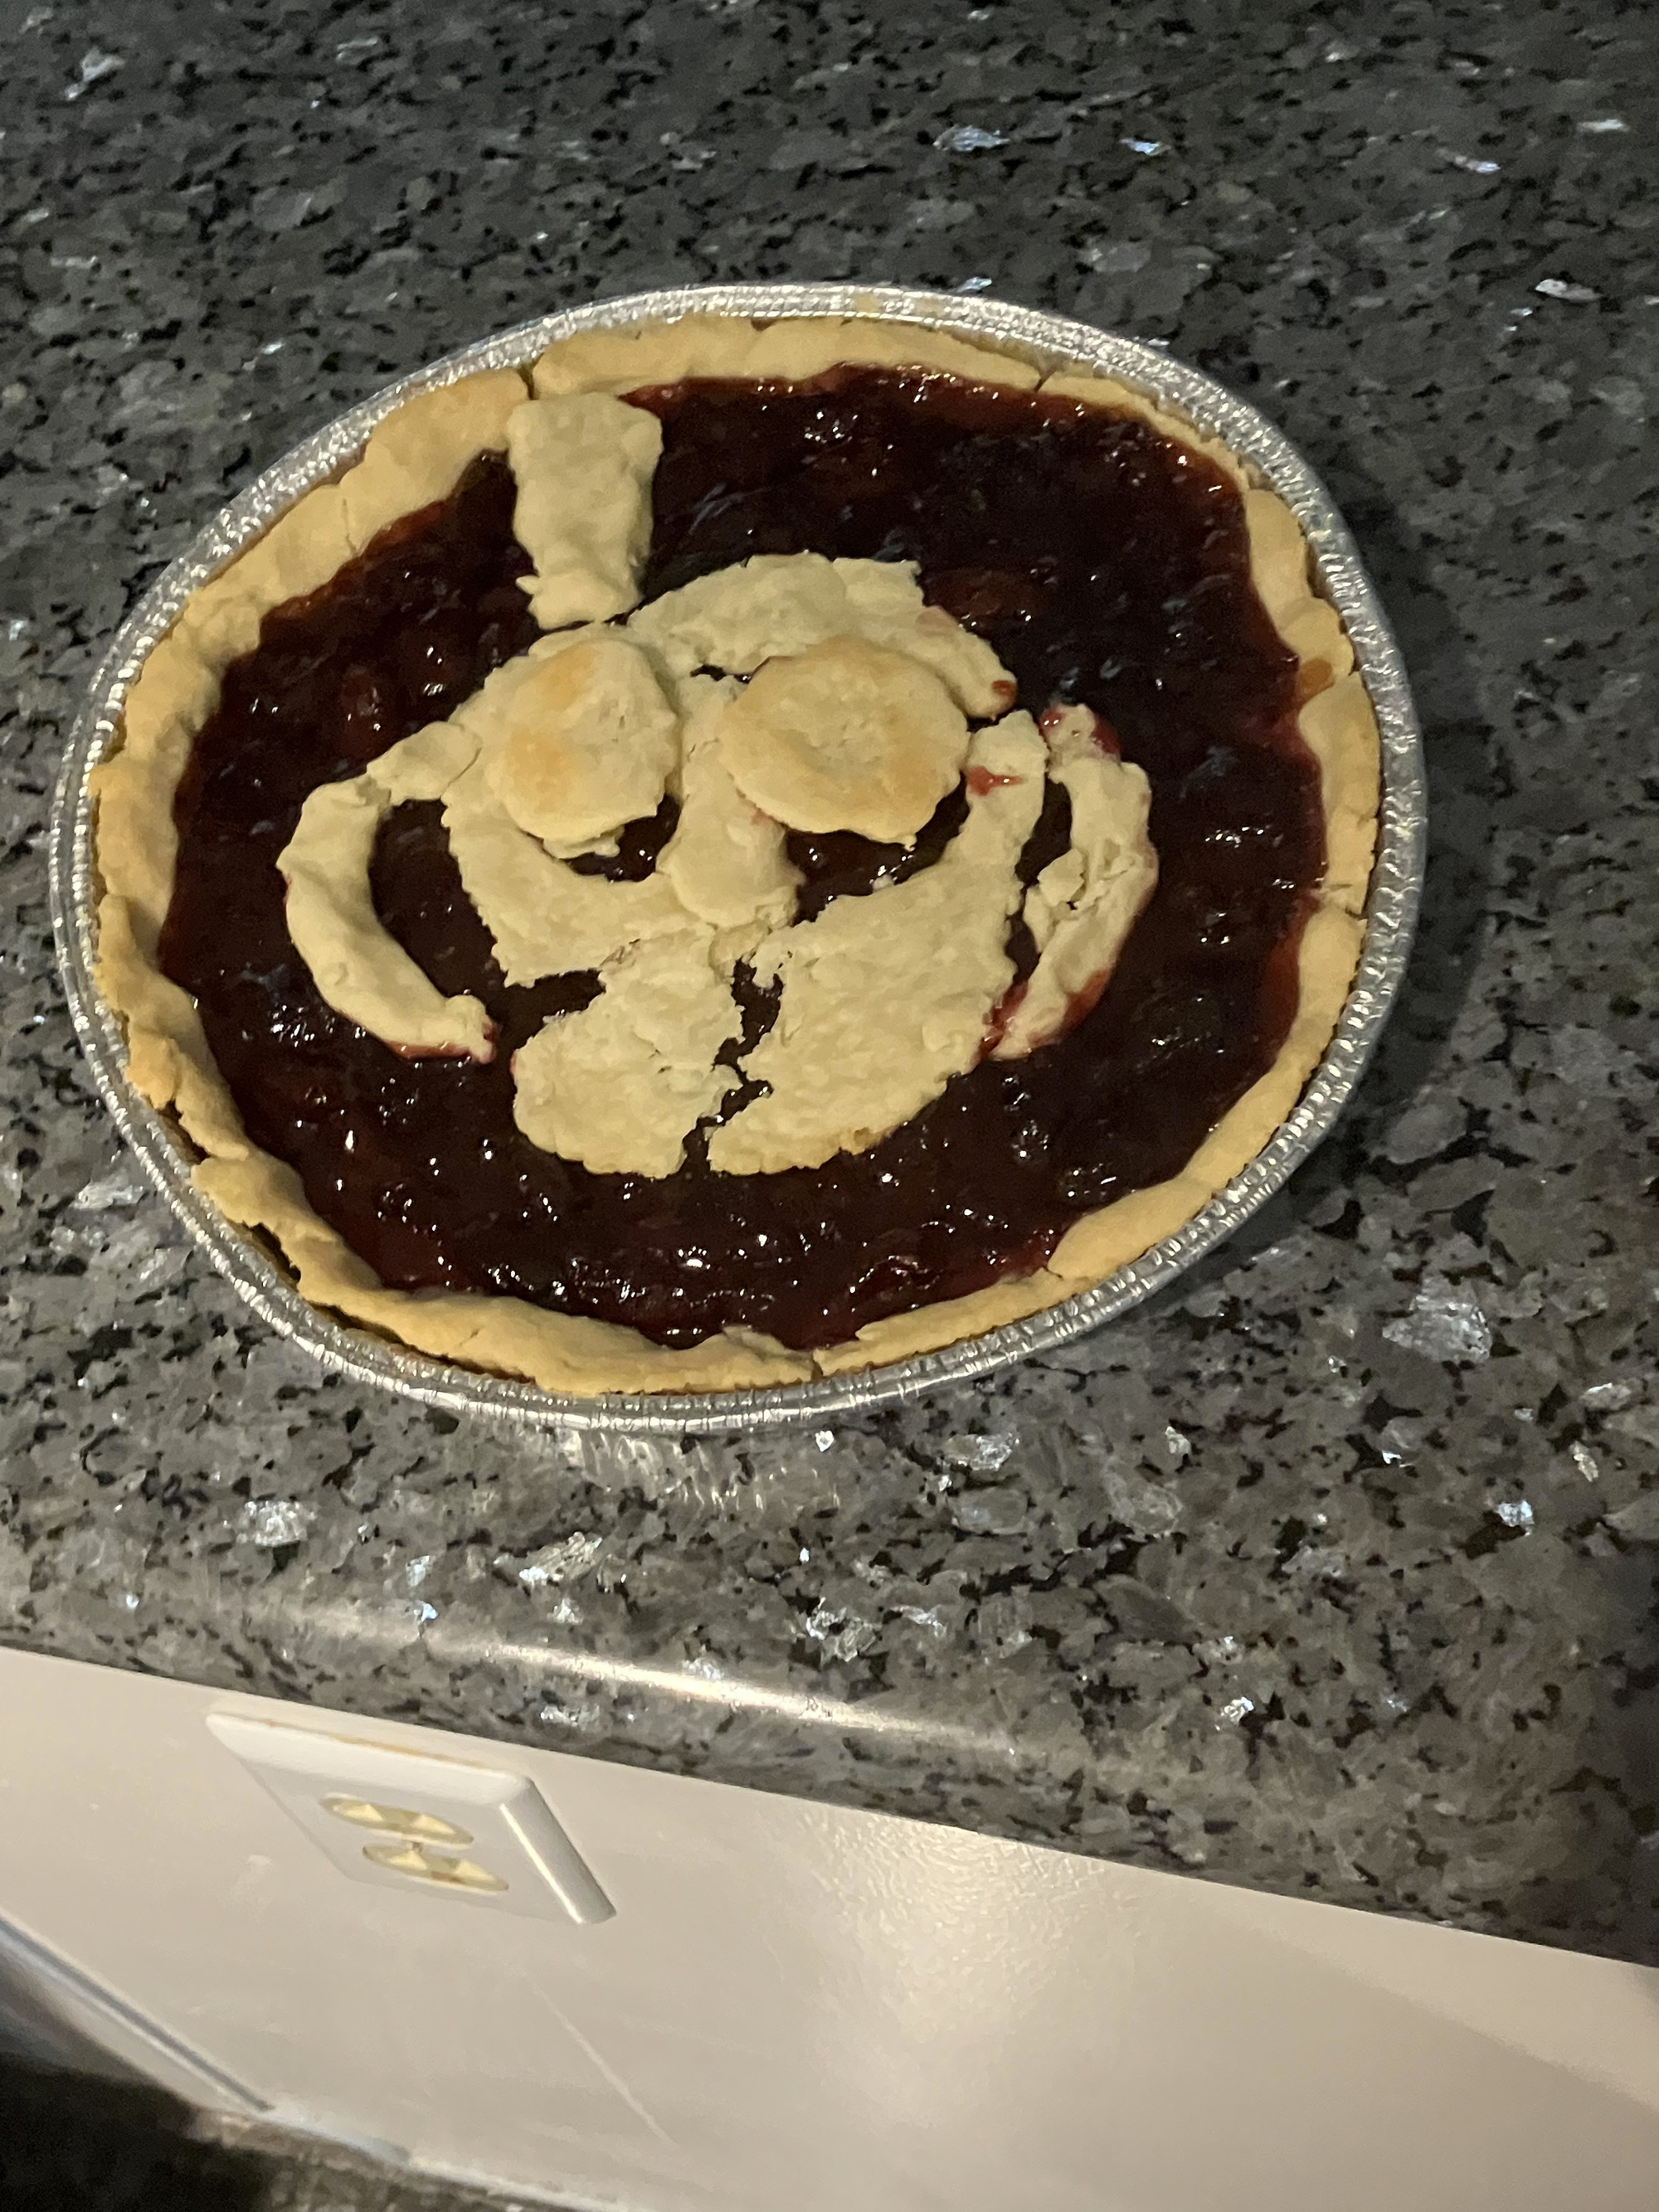 Cherry-bourbon pie with pie art of Ms. Chalice on top